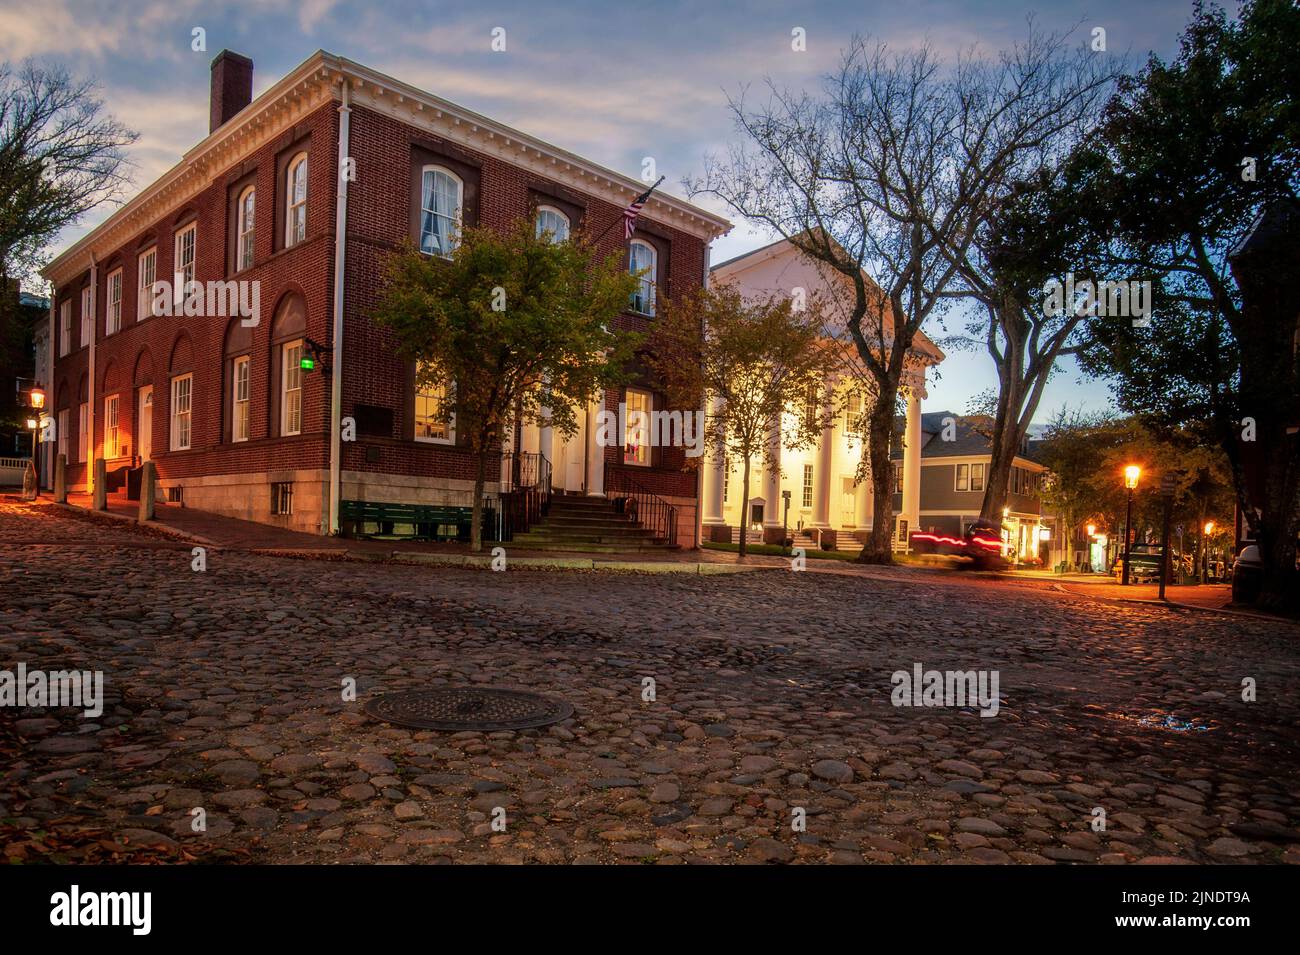 USA, Massachusetts, Nantucket Island. Nantucket Town, Main Street, historic house detail. Stock Photo